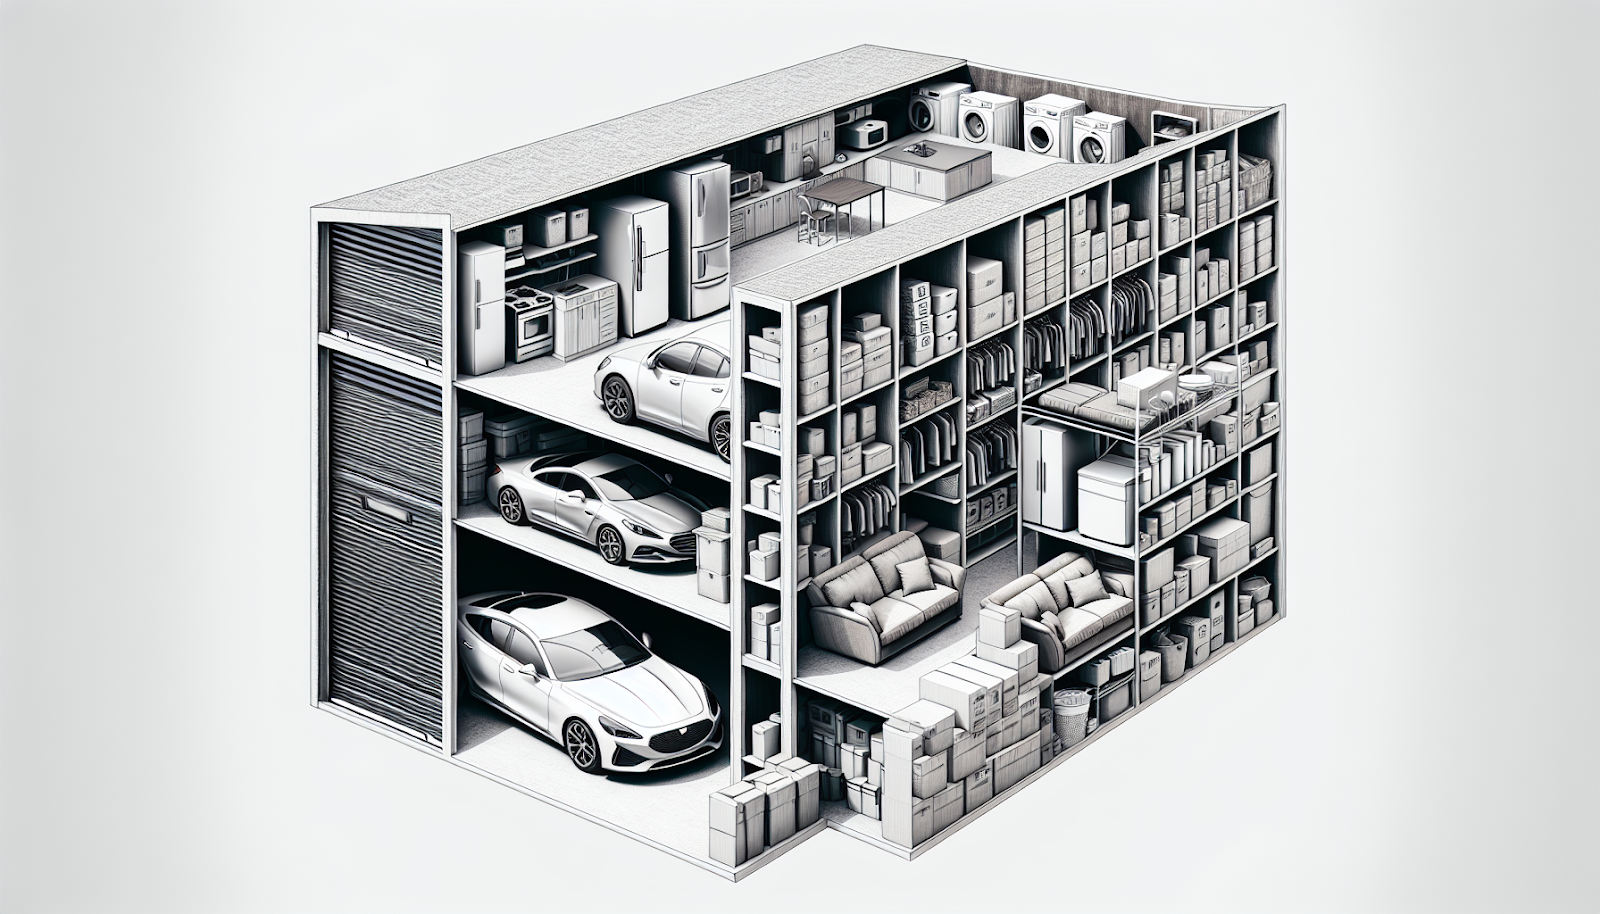 Illustration of a large storage unit